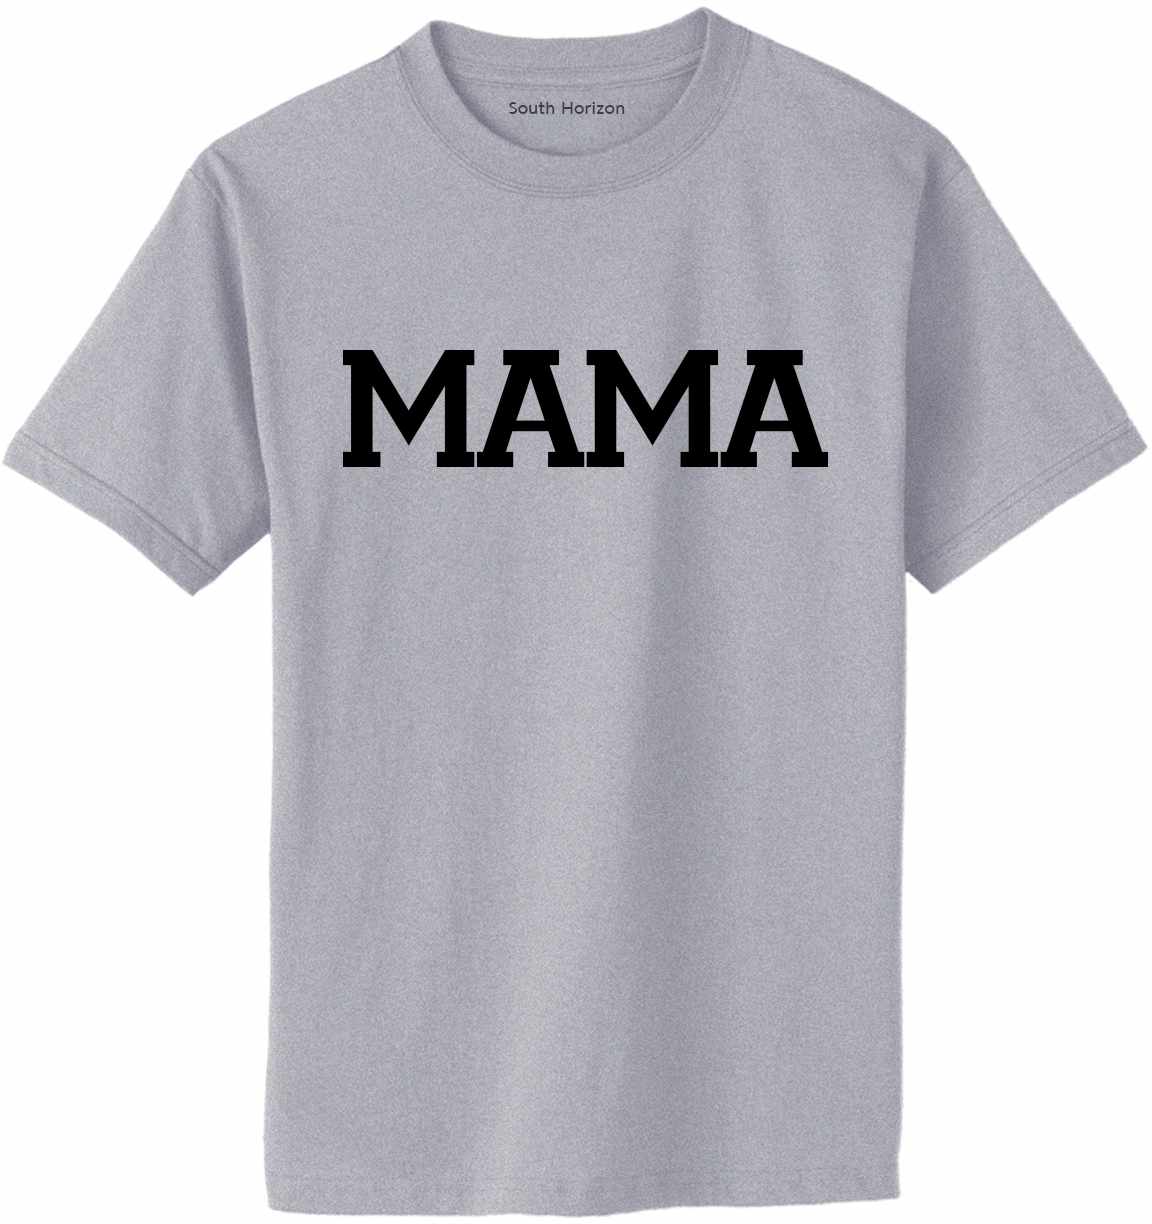 MAMA Adult T-Shirt (#1098-1)